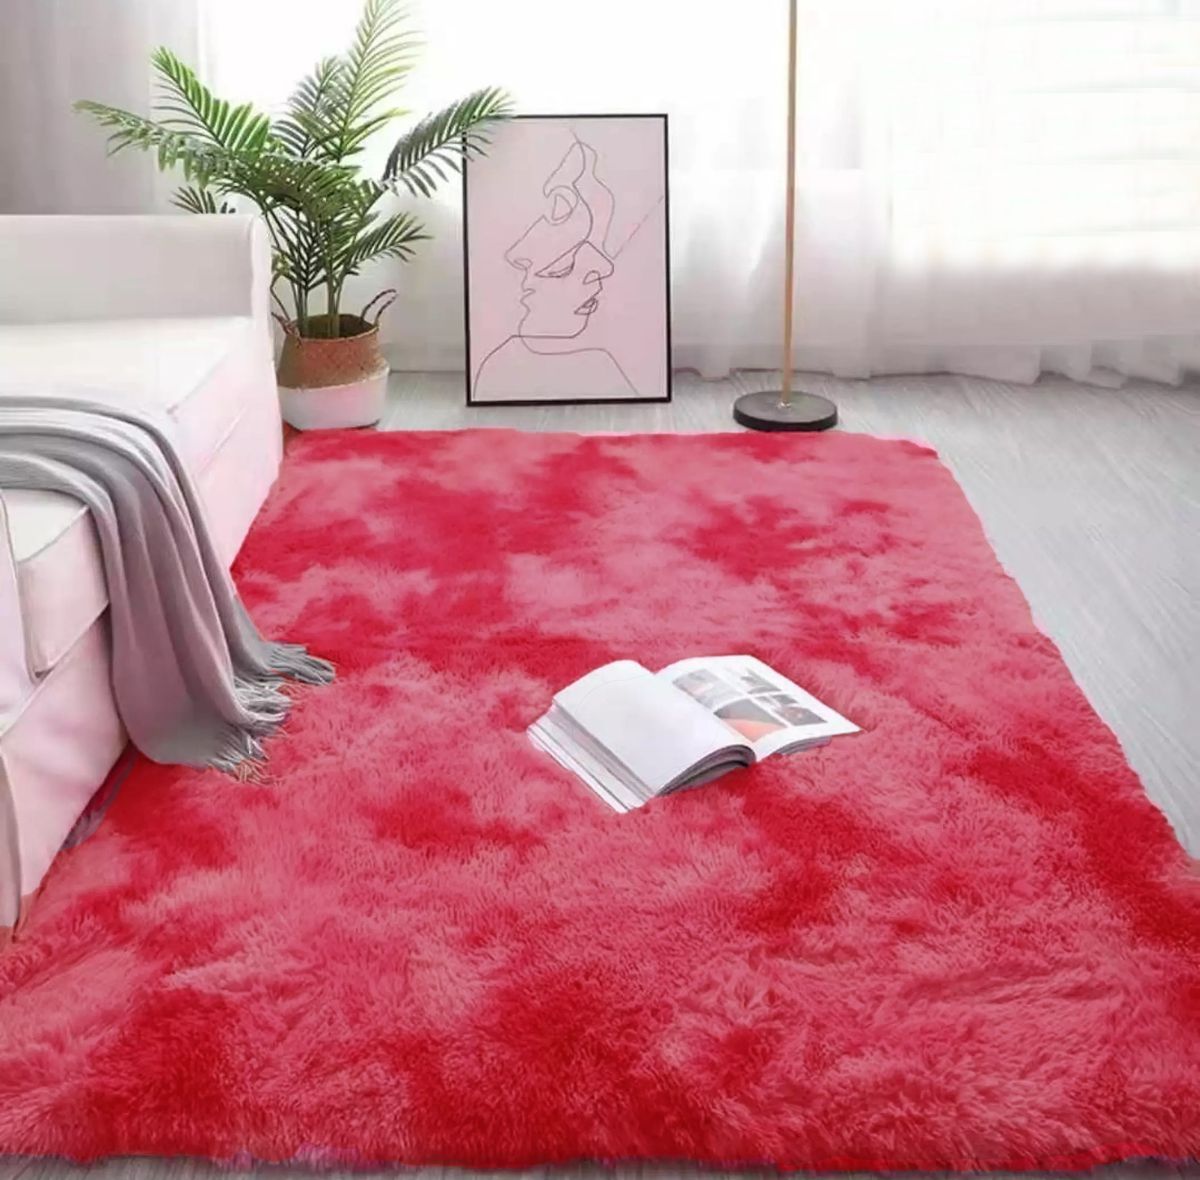 150 x 180cm Plush Two Tone Fluffy Carpet - Shaggy & Foldable Rugs